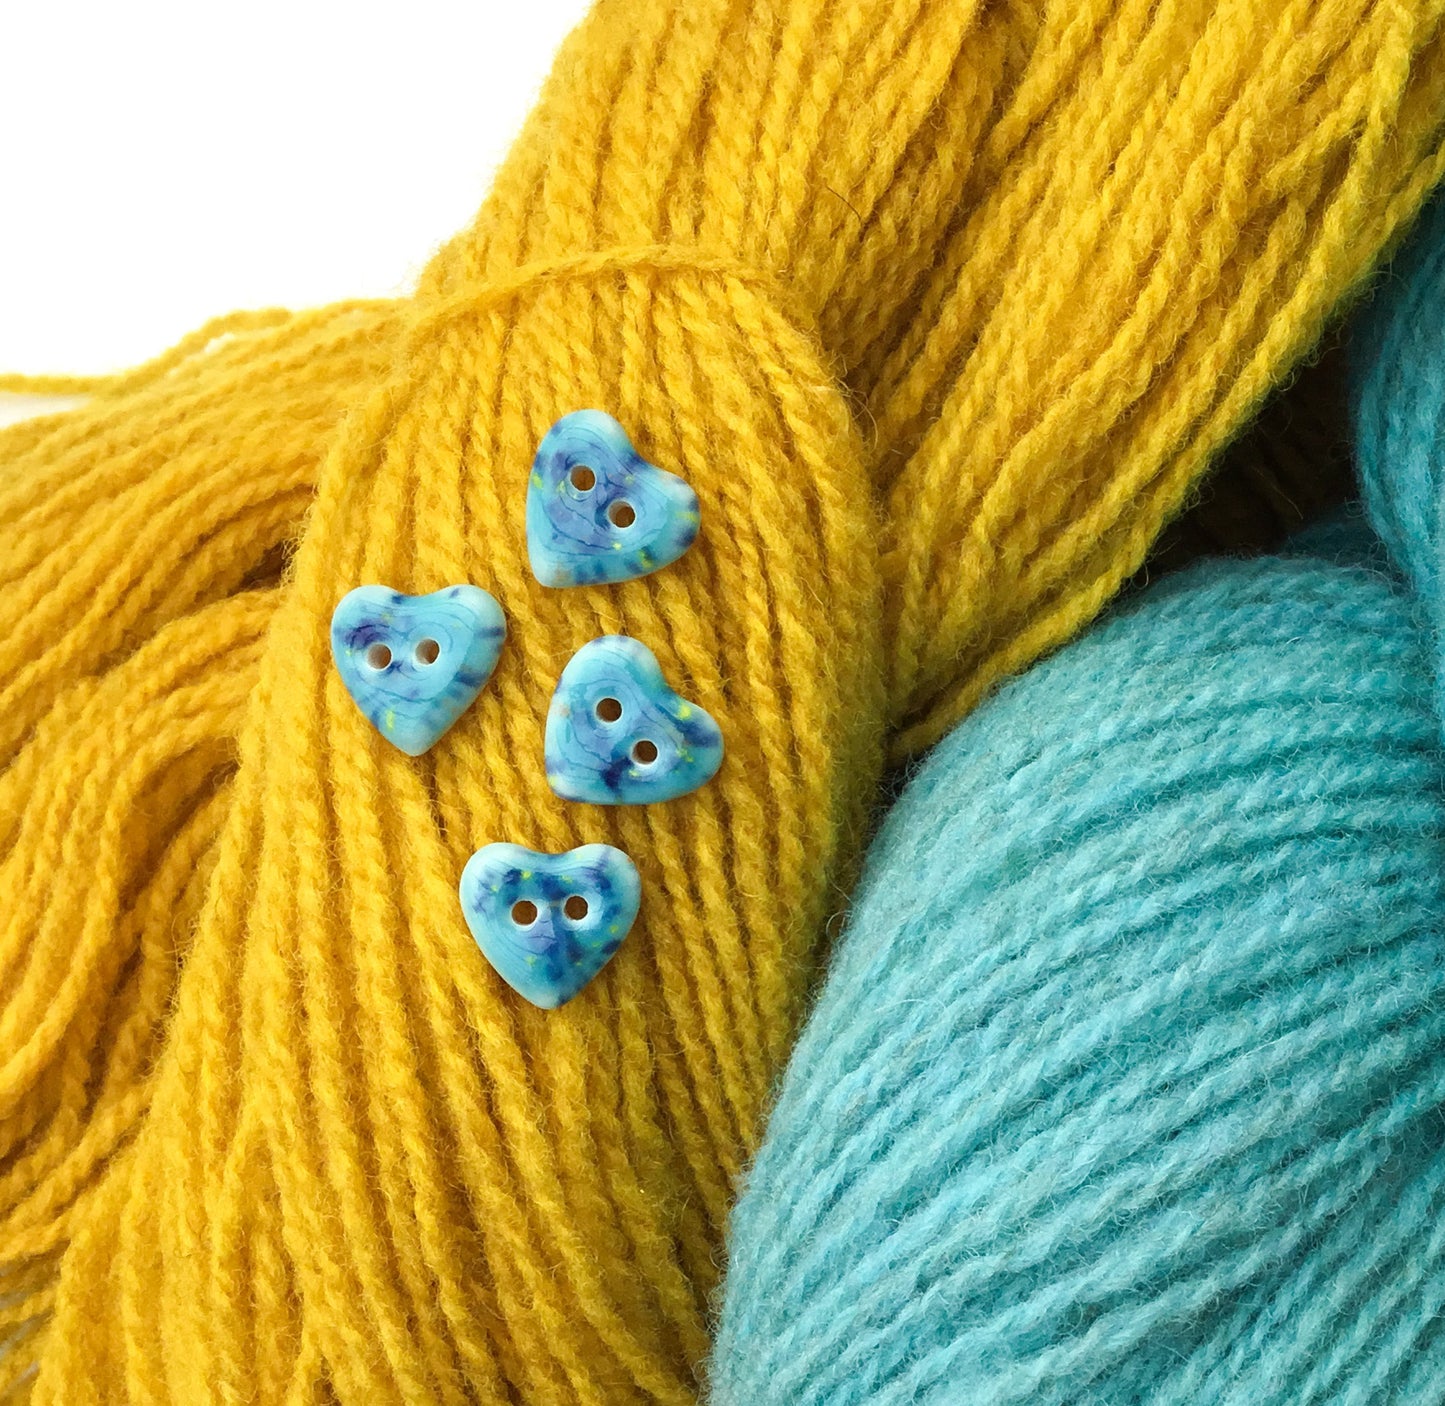 Turquoise Blue Fingering Wool Yarn (80 Merino/20 Romney) 2 ply - 4 oz skeins